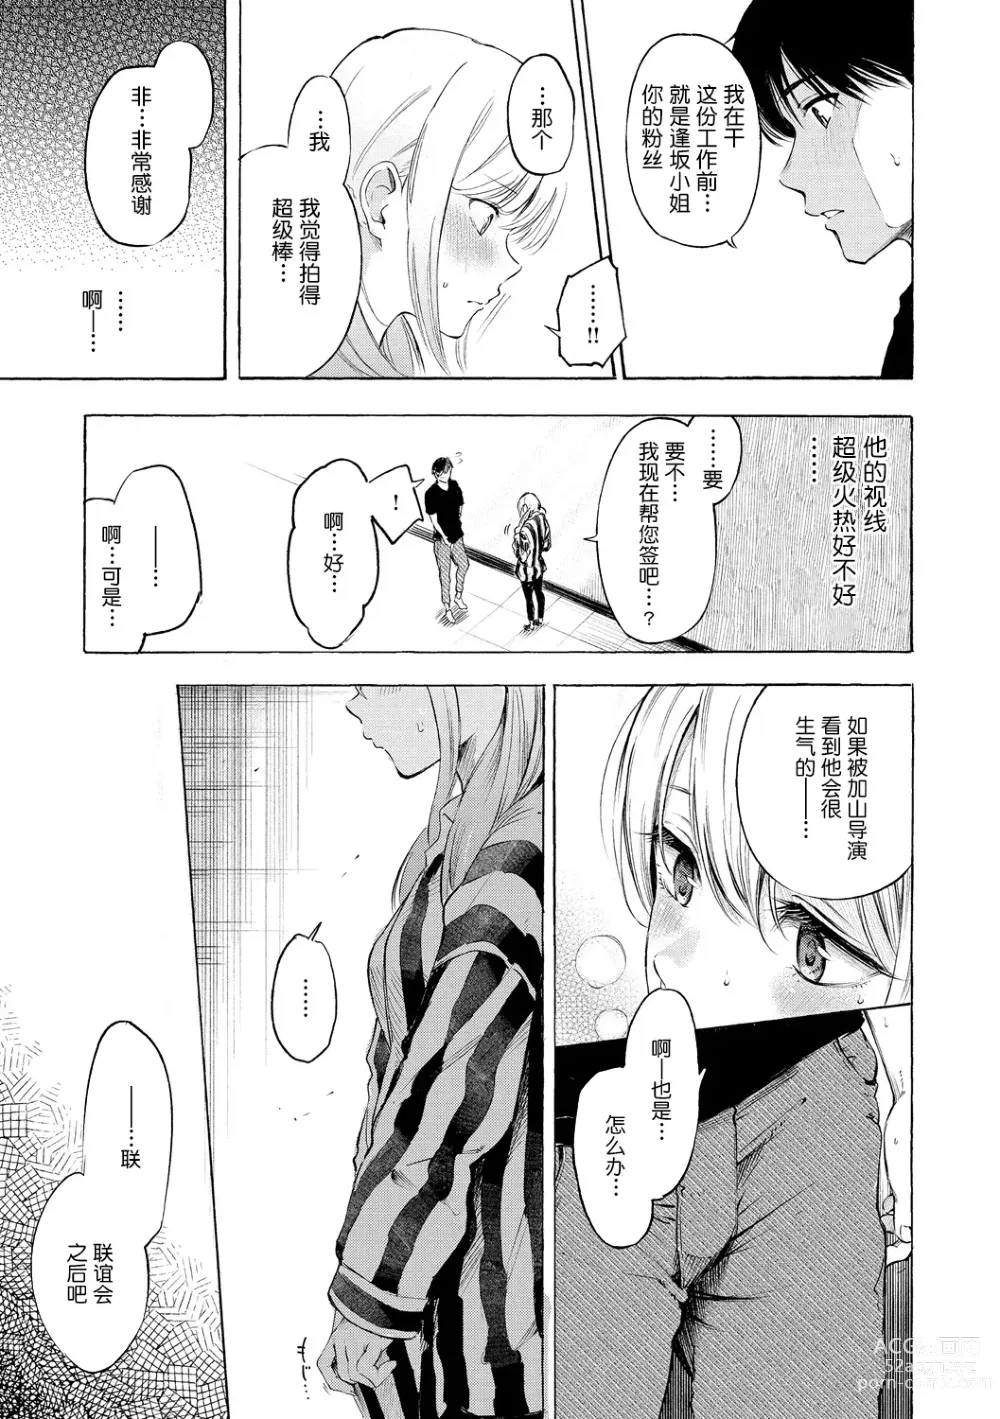 Page 14 of manga Frustration Girls